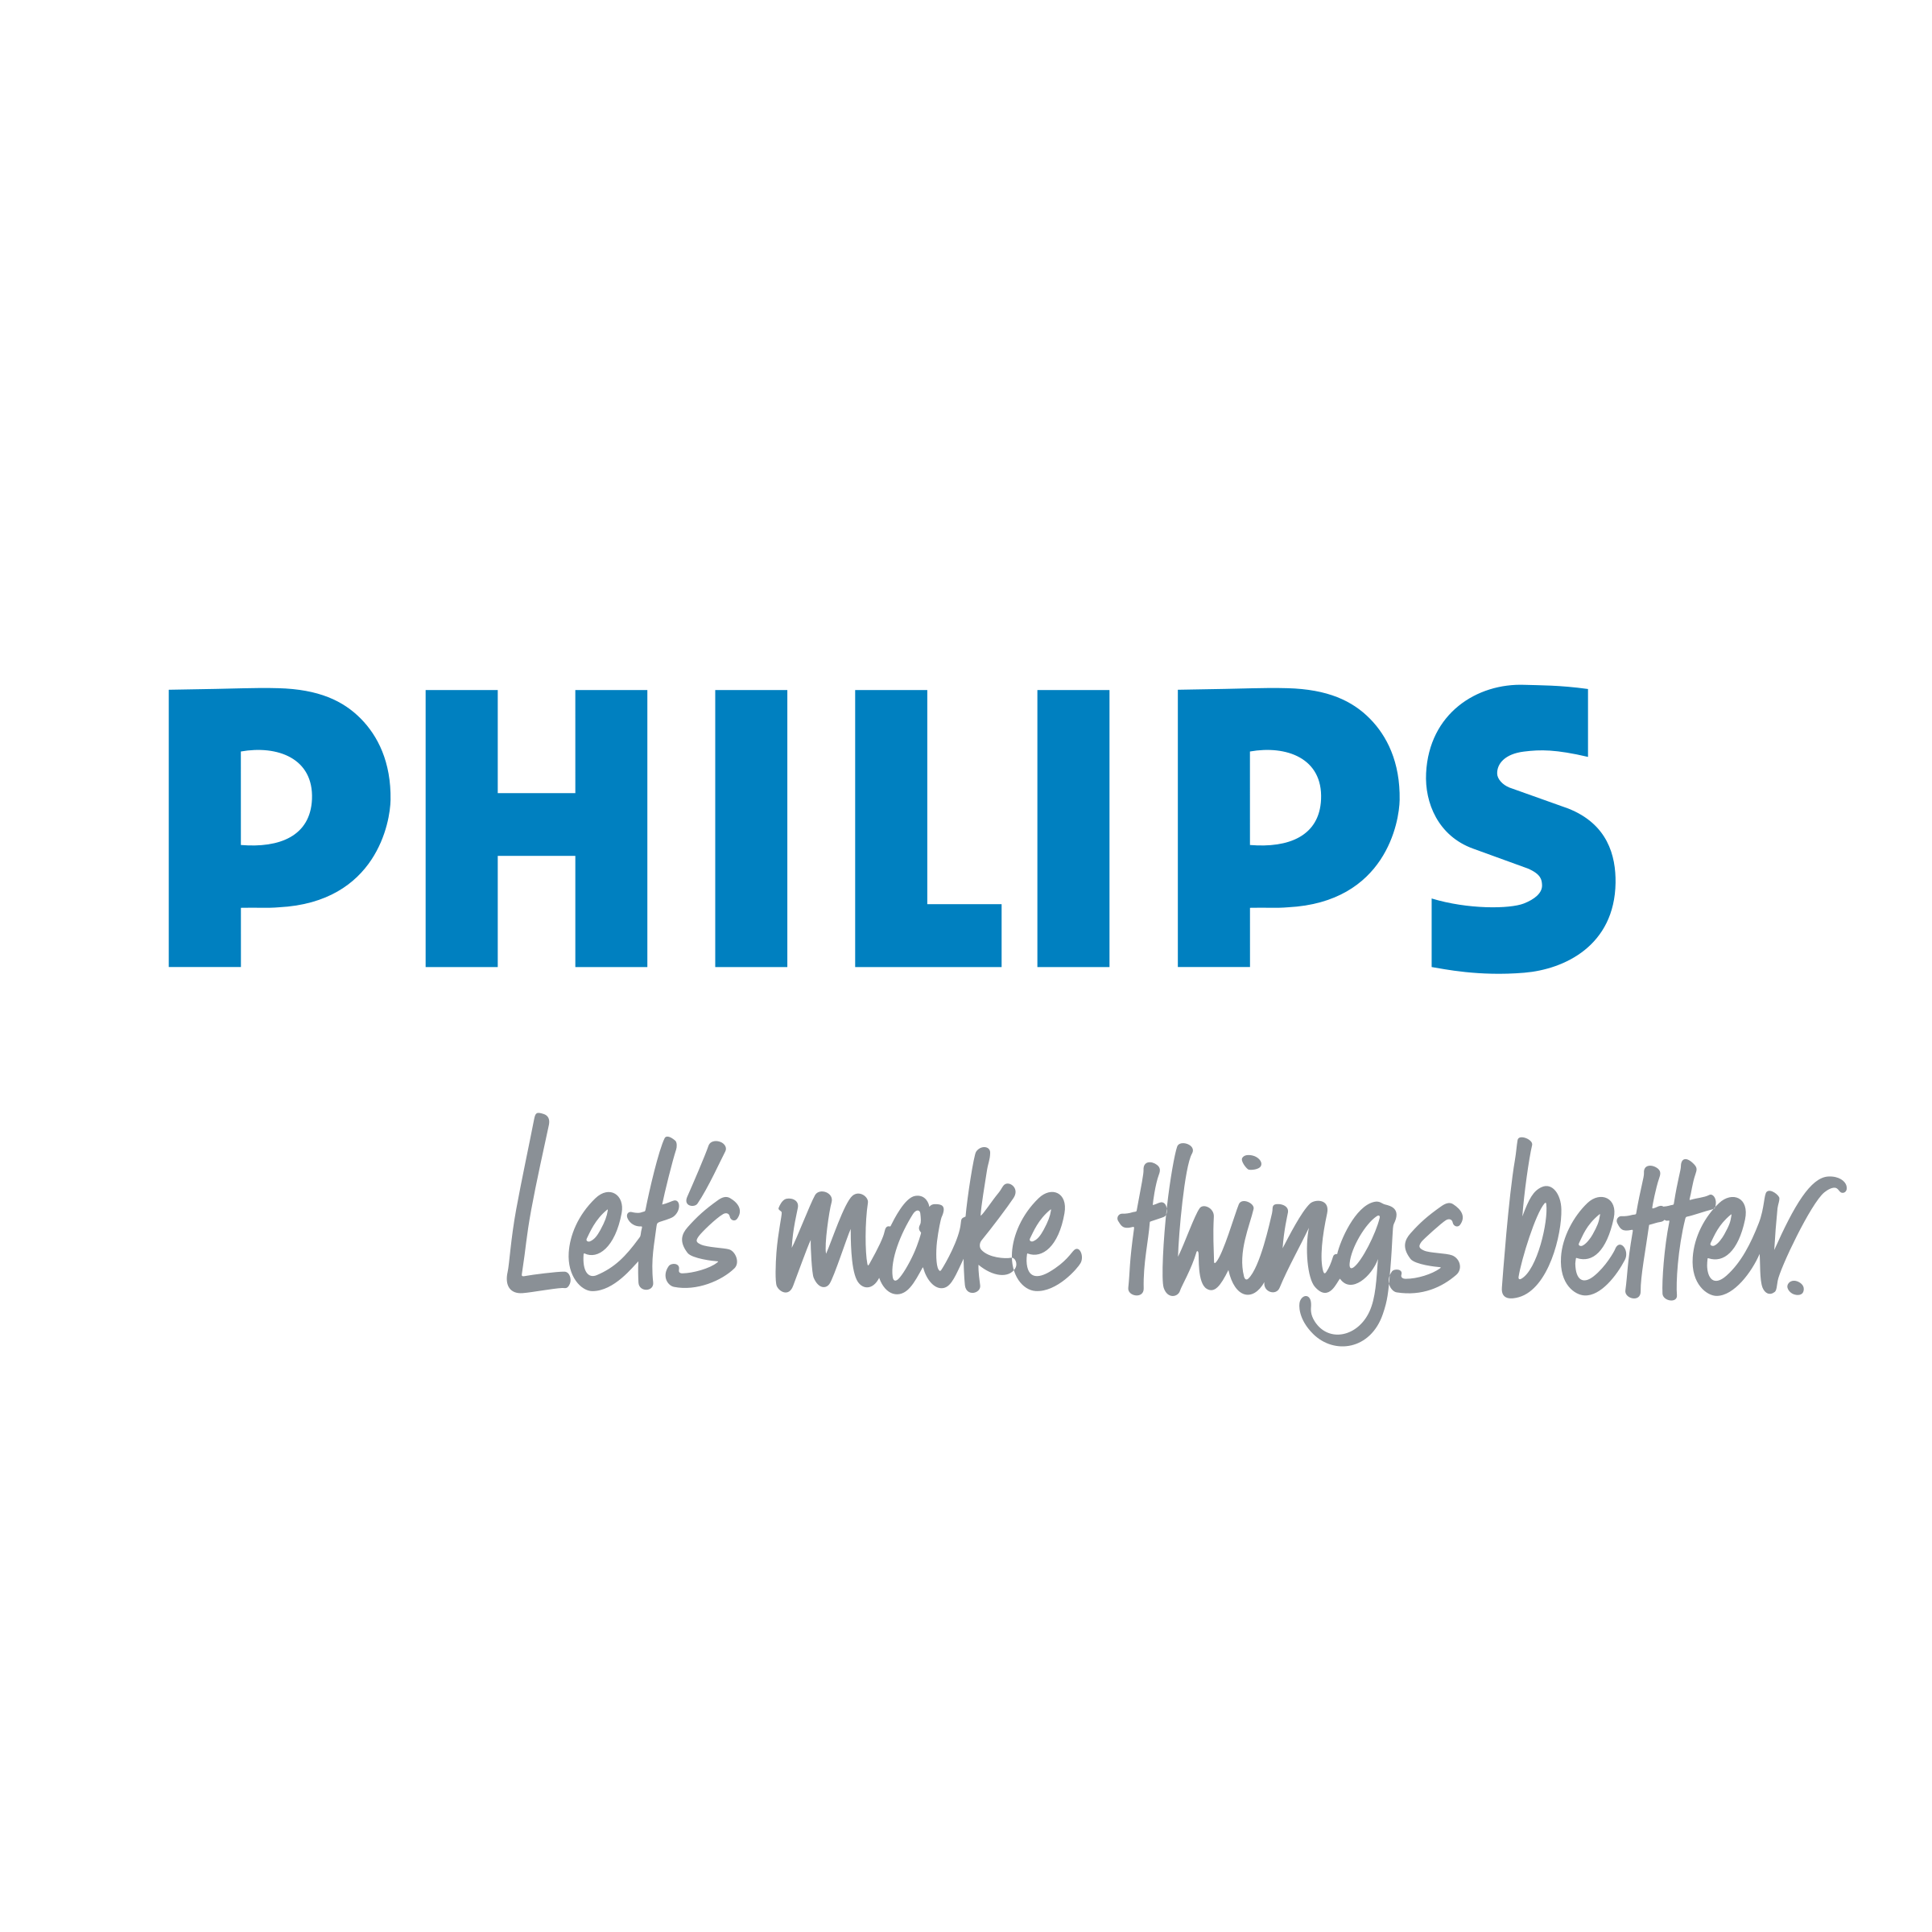 Philips – Logos Download